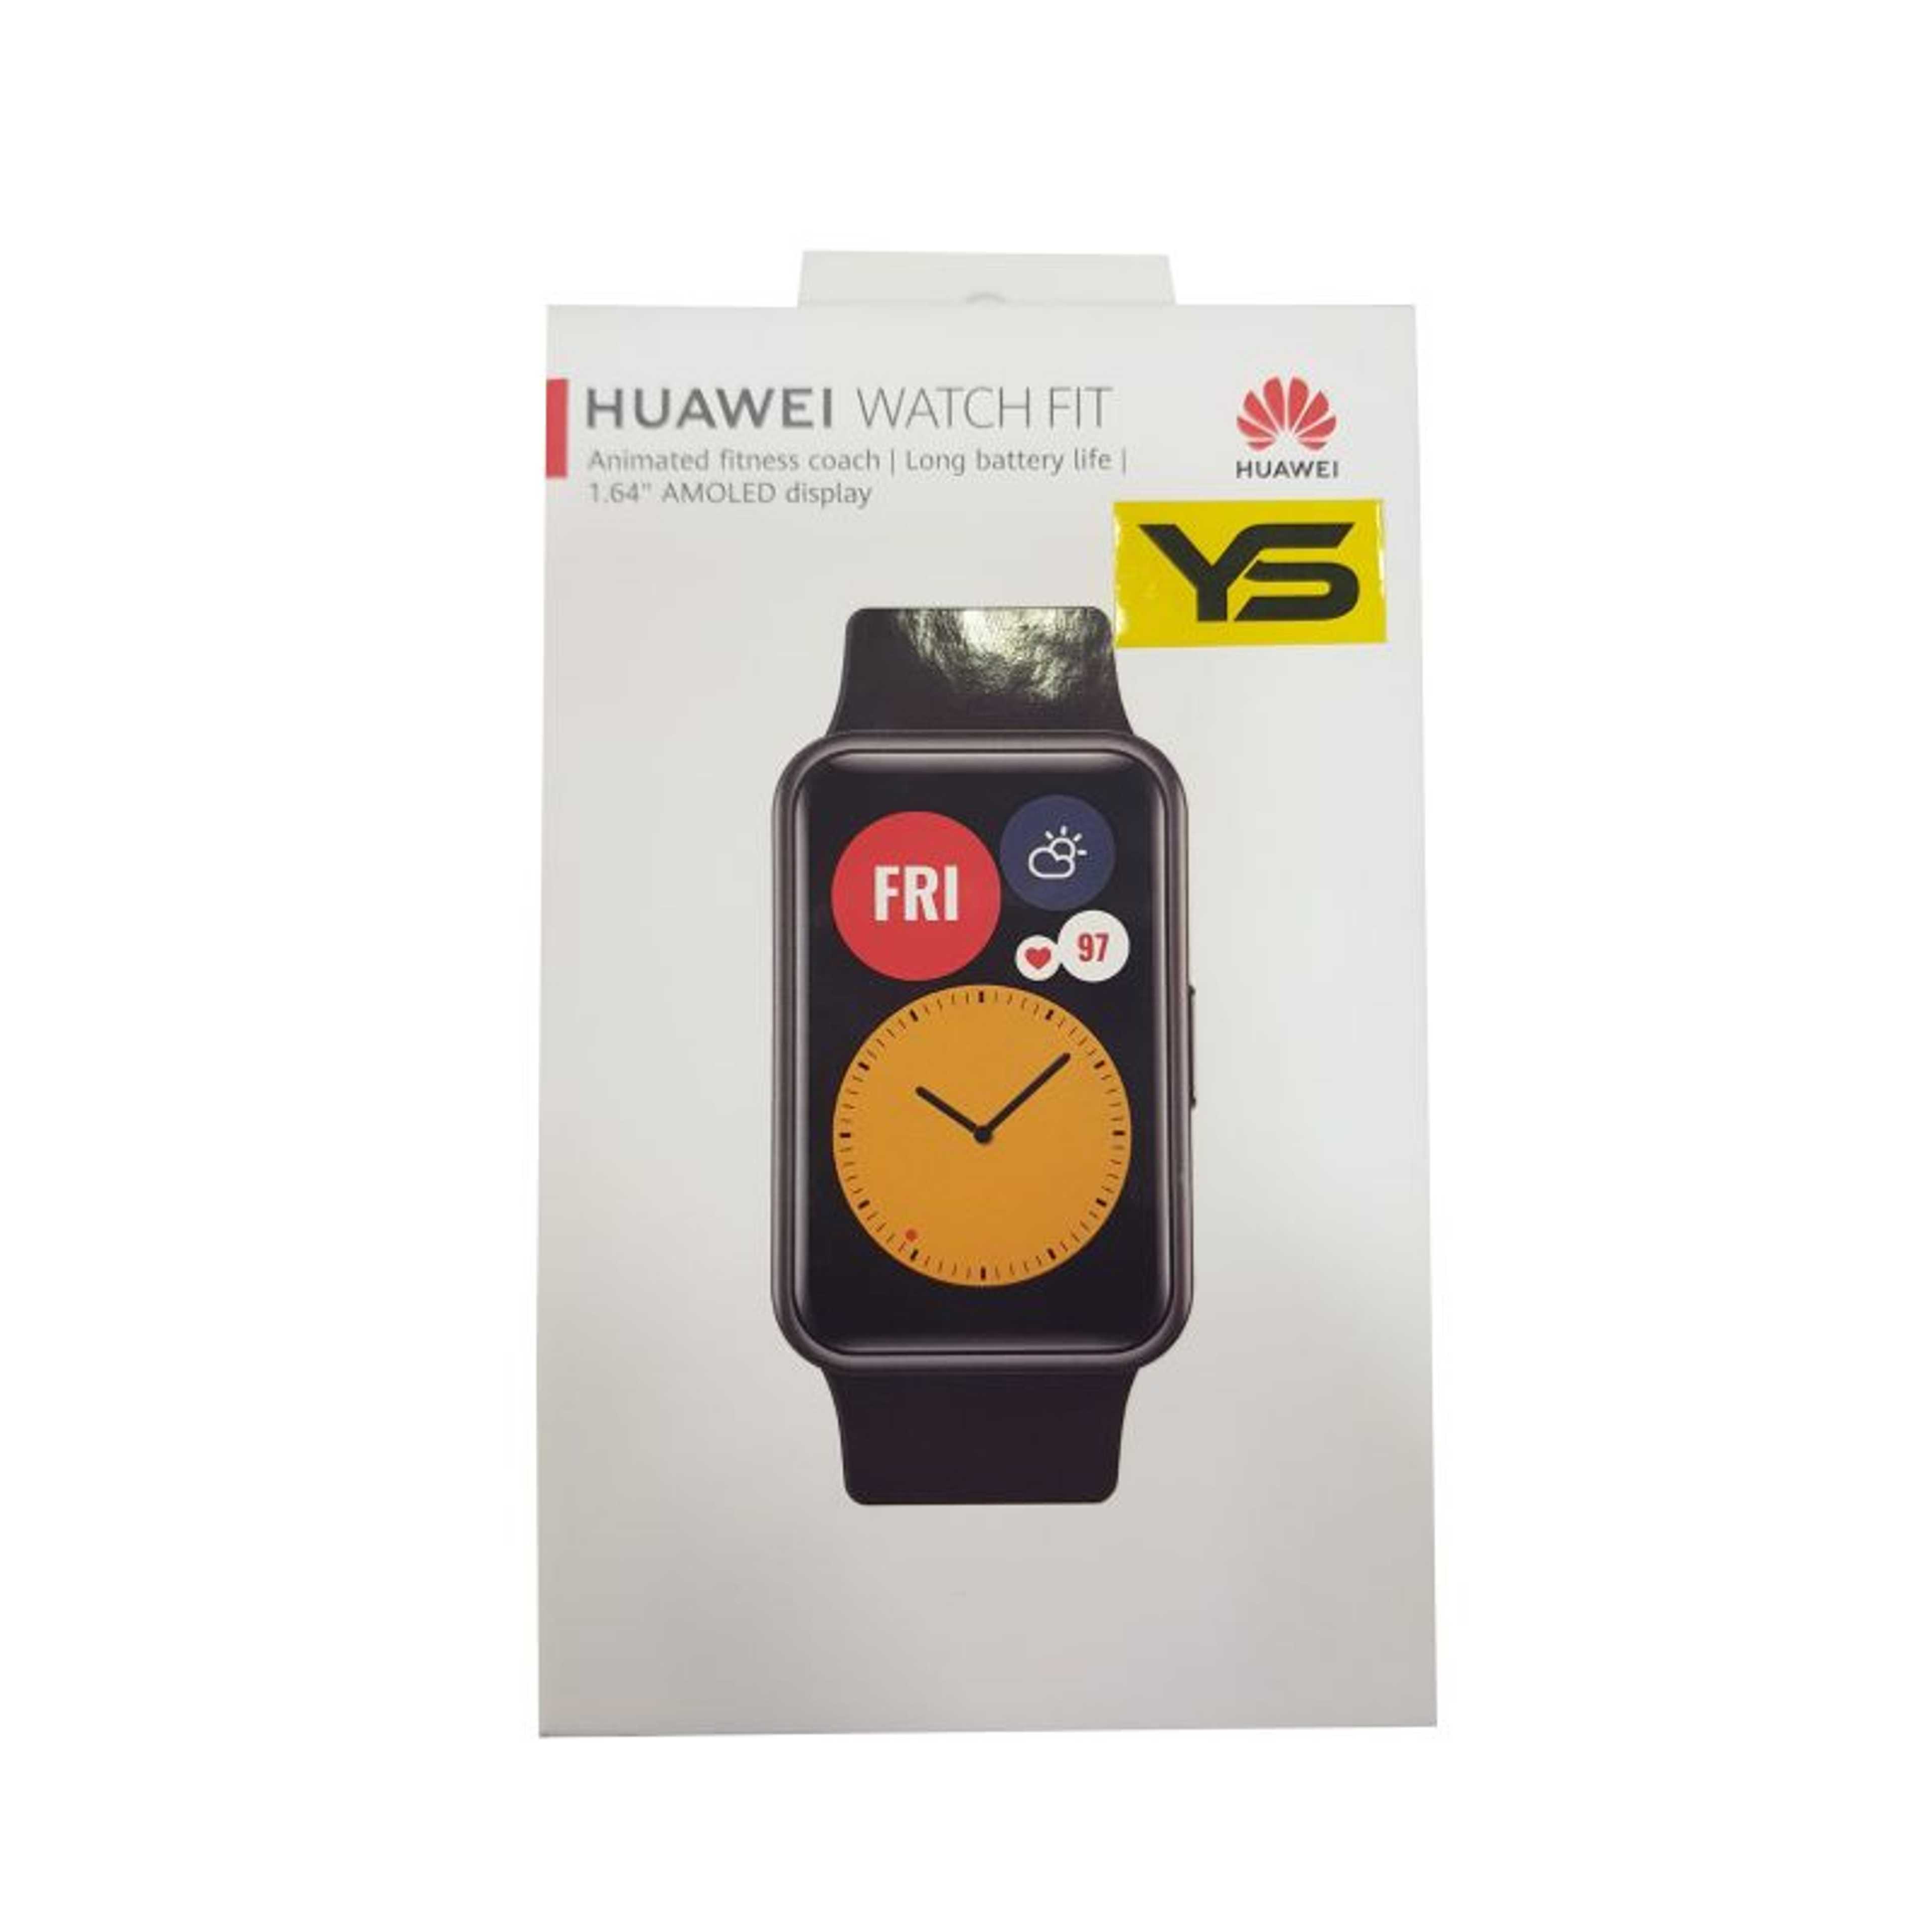 Huawei YS Watch Fit 1.64 inch Amoled Display